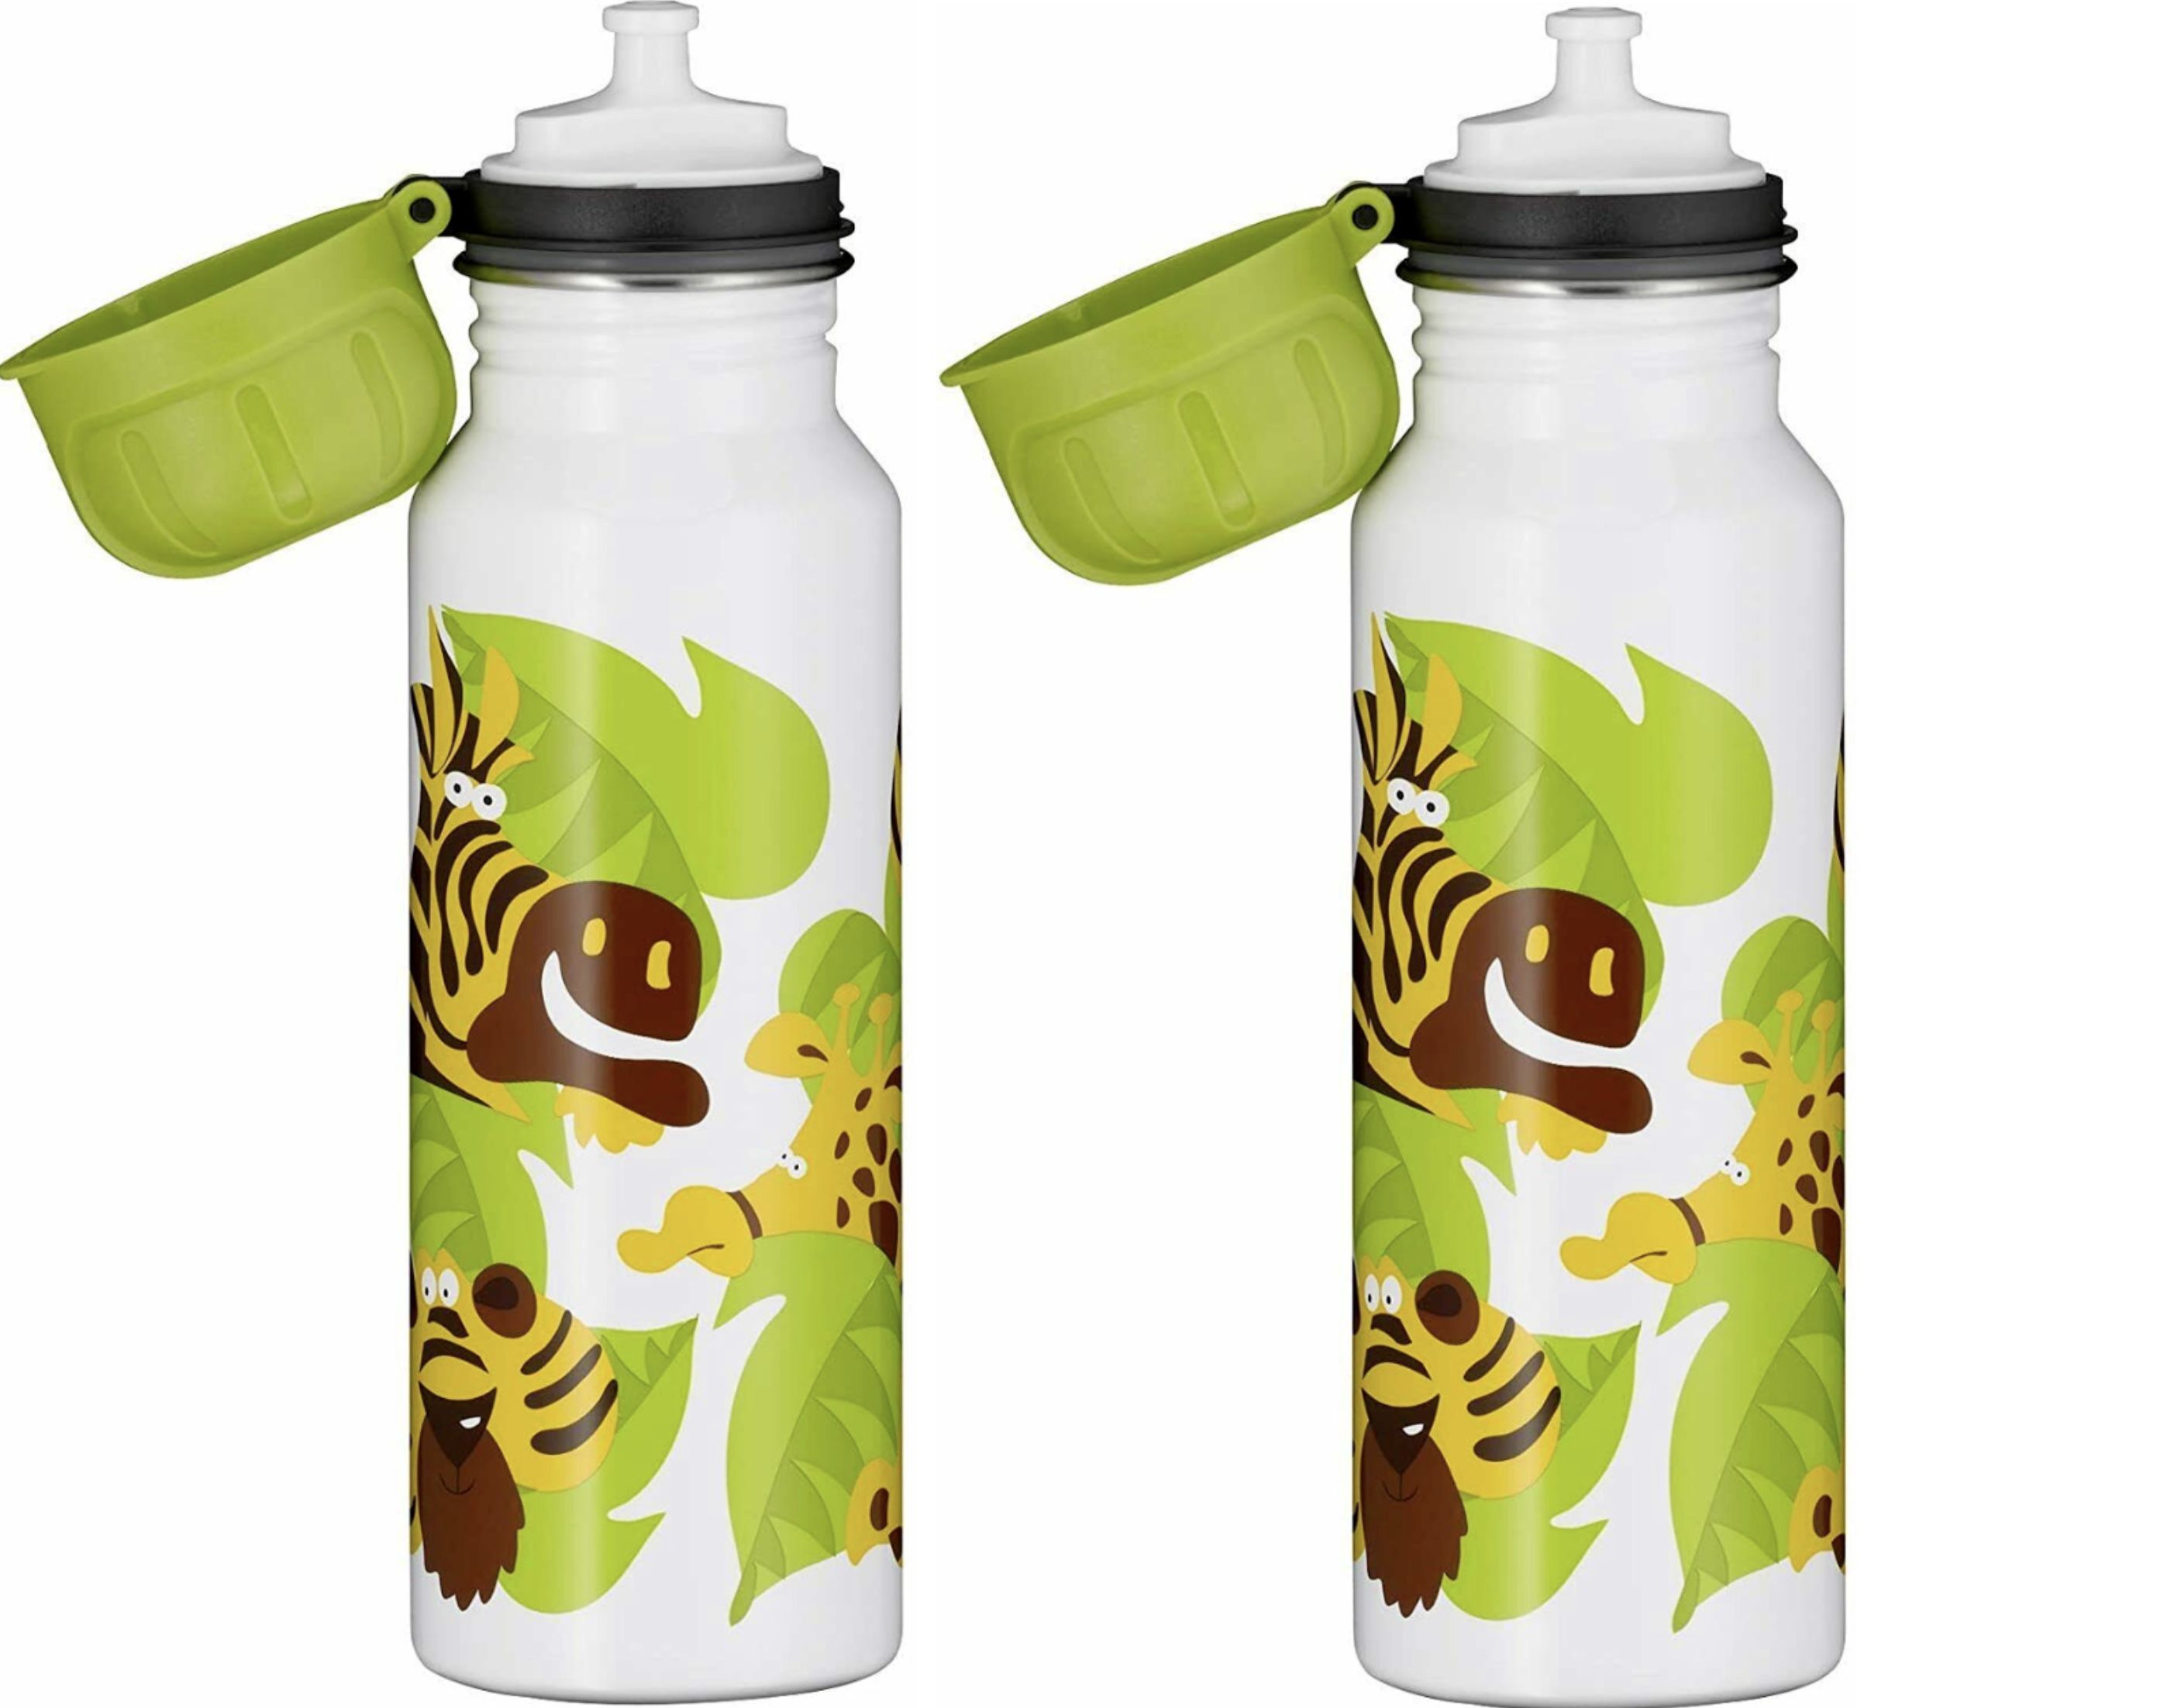 2x alfi Edelstahl Kinder-Trinkflasche mit Jungle-Design (je 600ml) für 9,99€ (statt 20€)